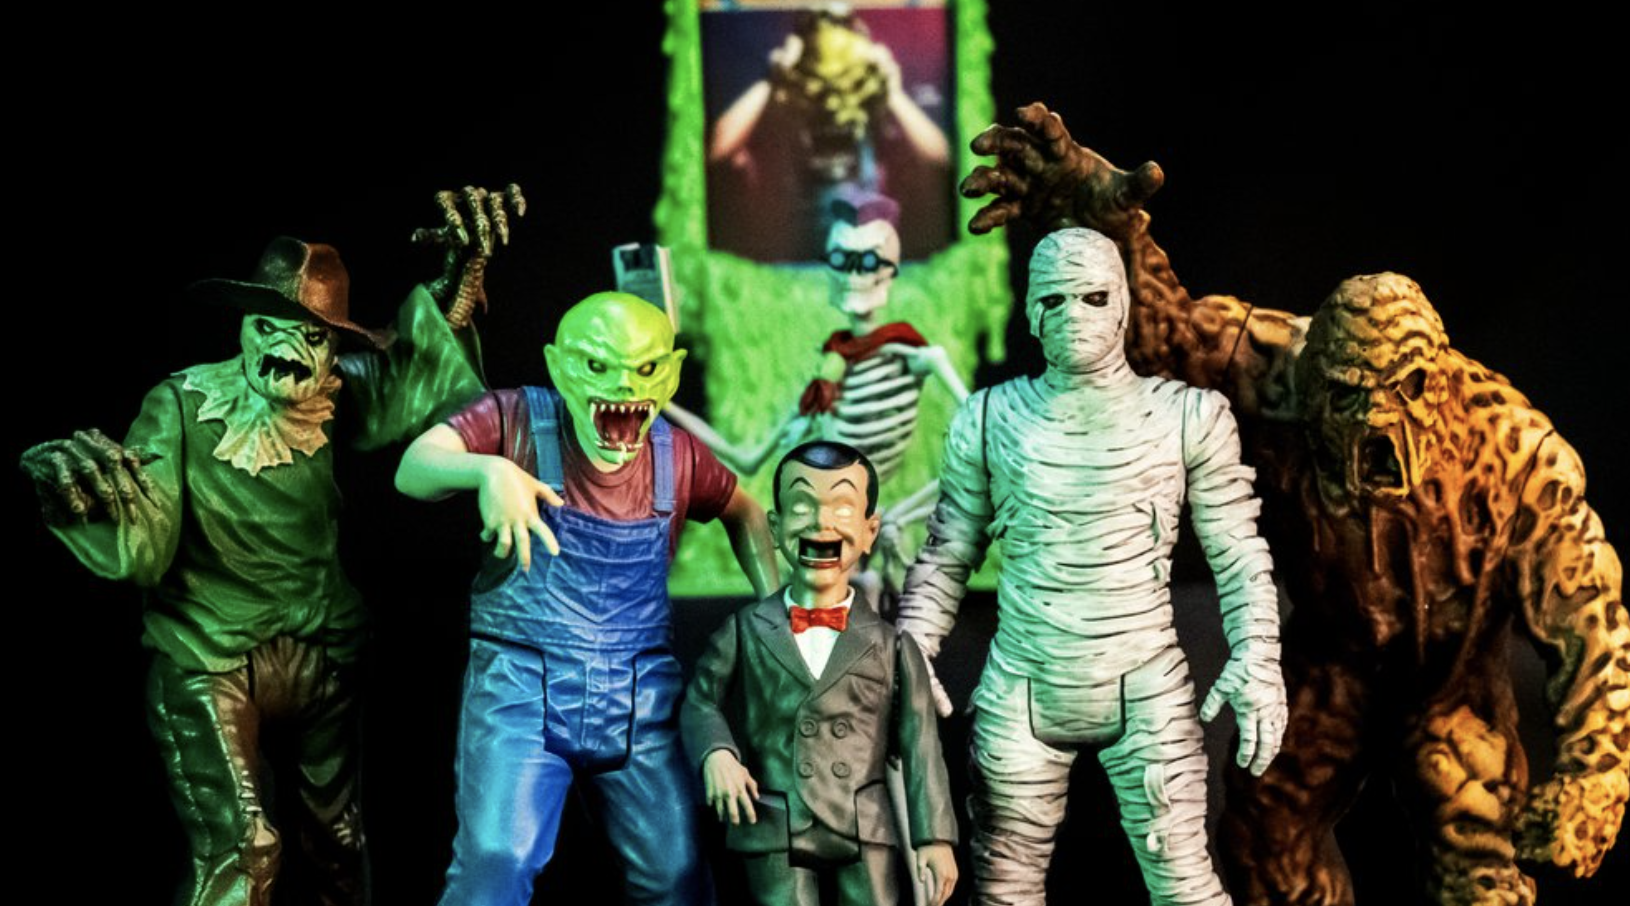 Set 5 Figurines collector Disney Monstres et Compagnie